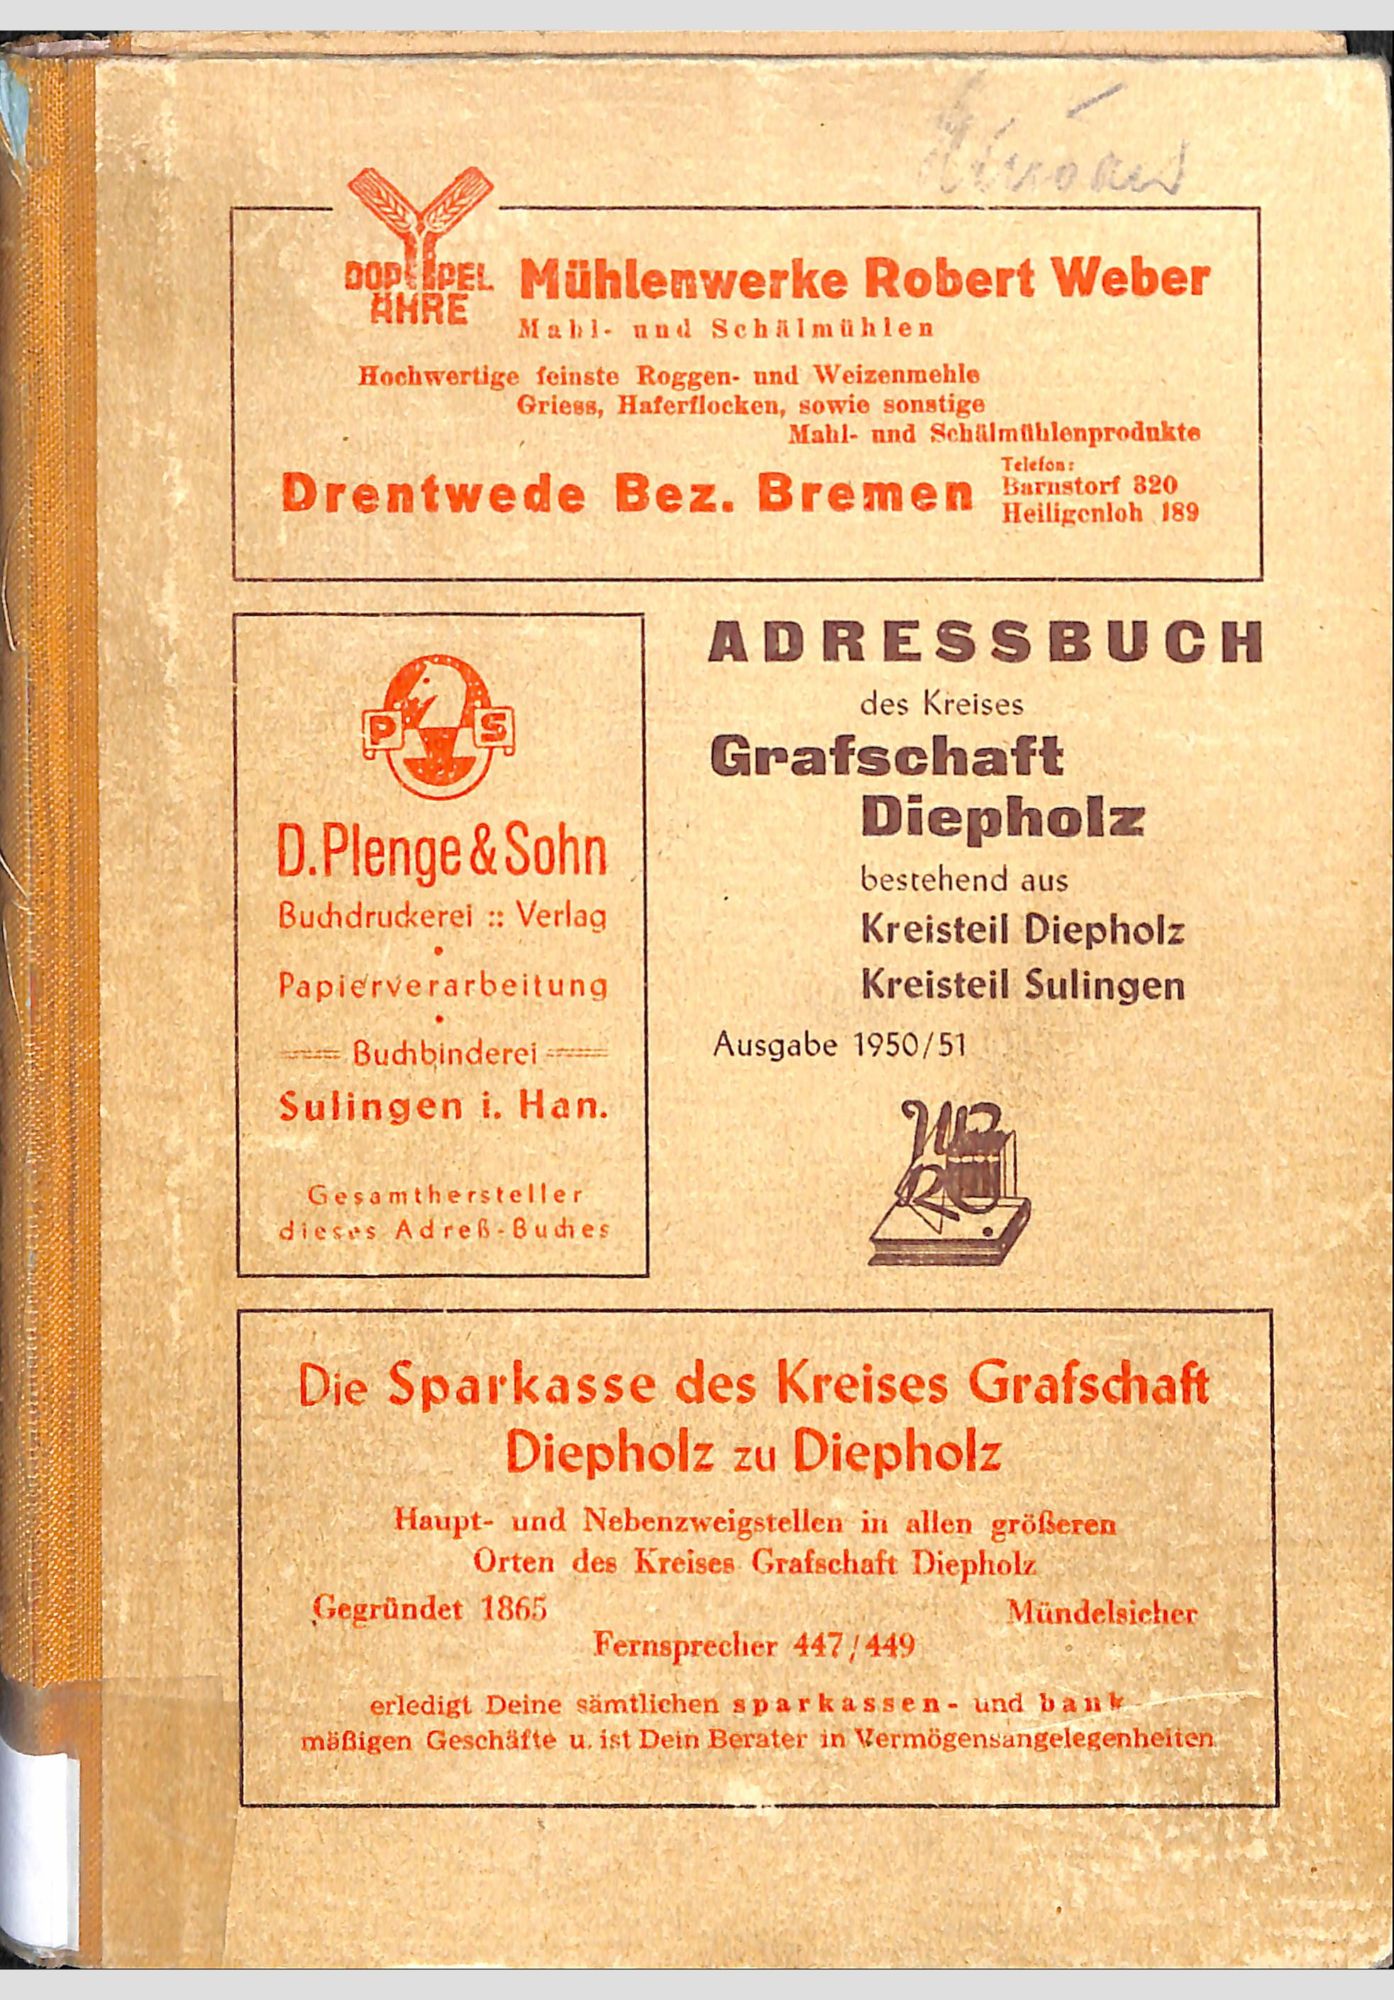 Adressbuch des Kreises Gafschaft Diepholz 1950/51